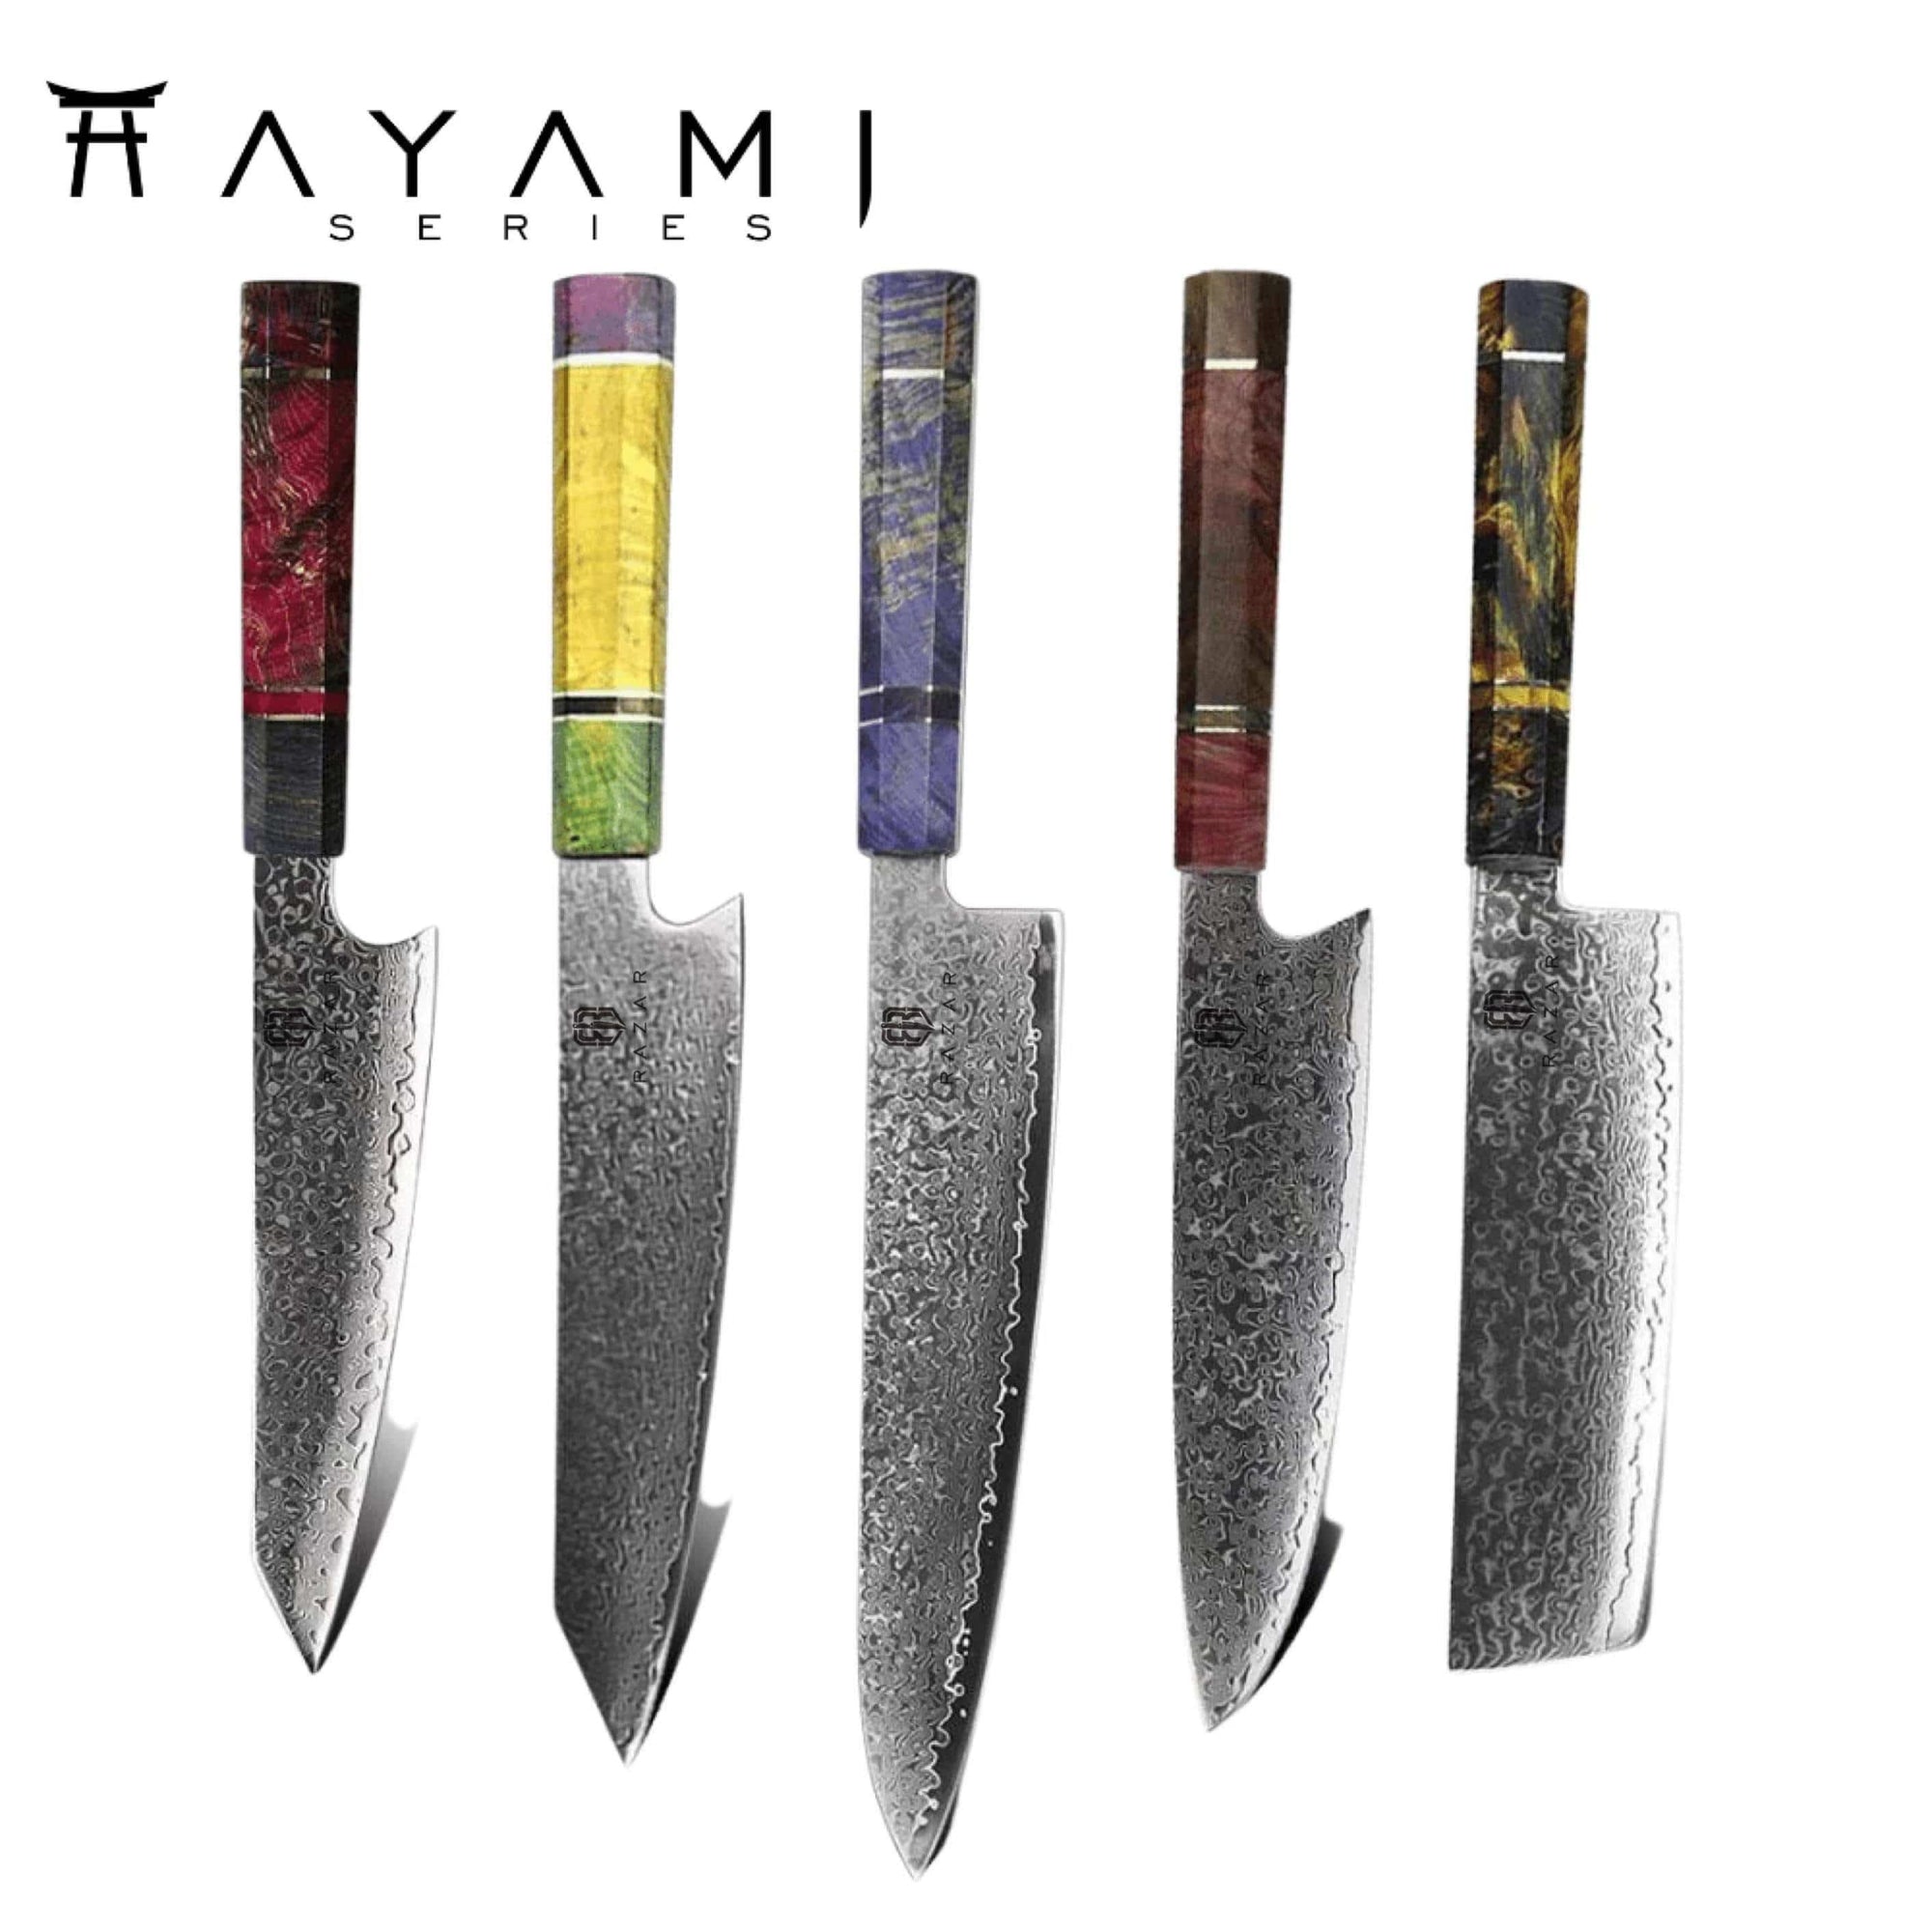 Hayami series - Chefs bundle